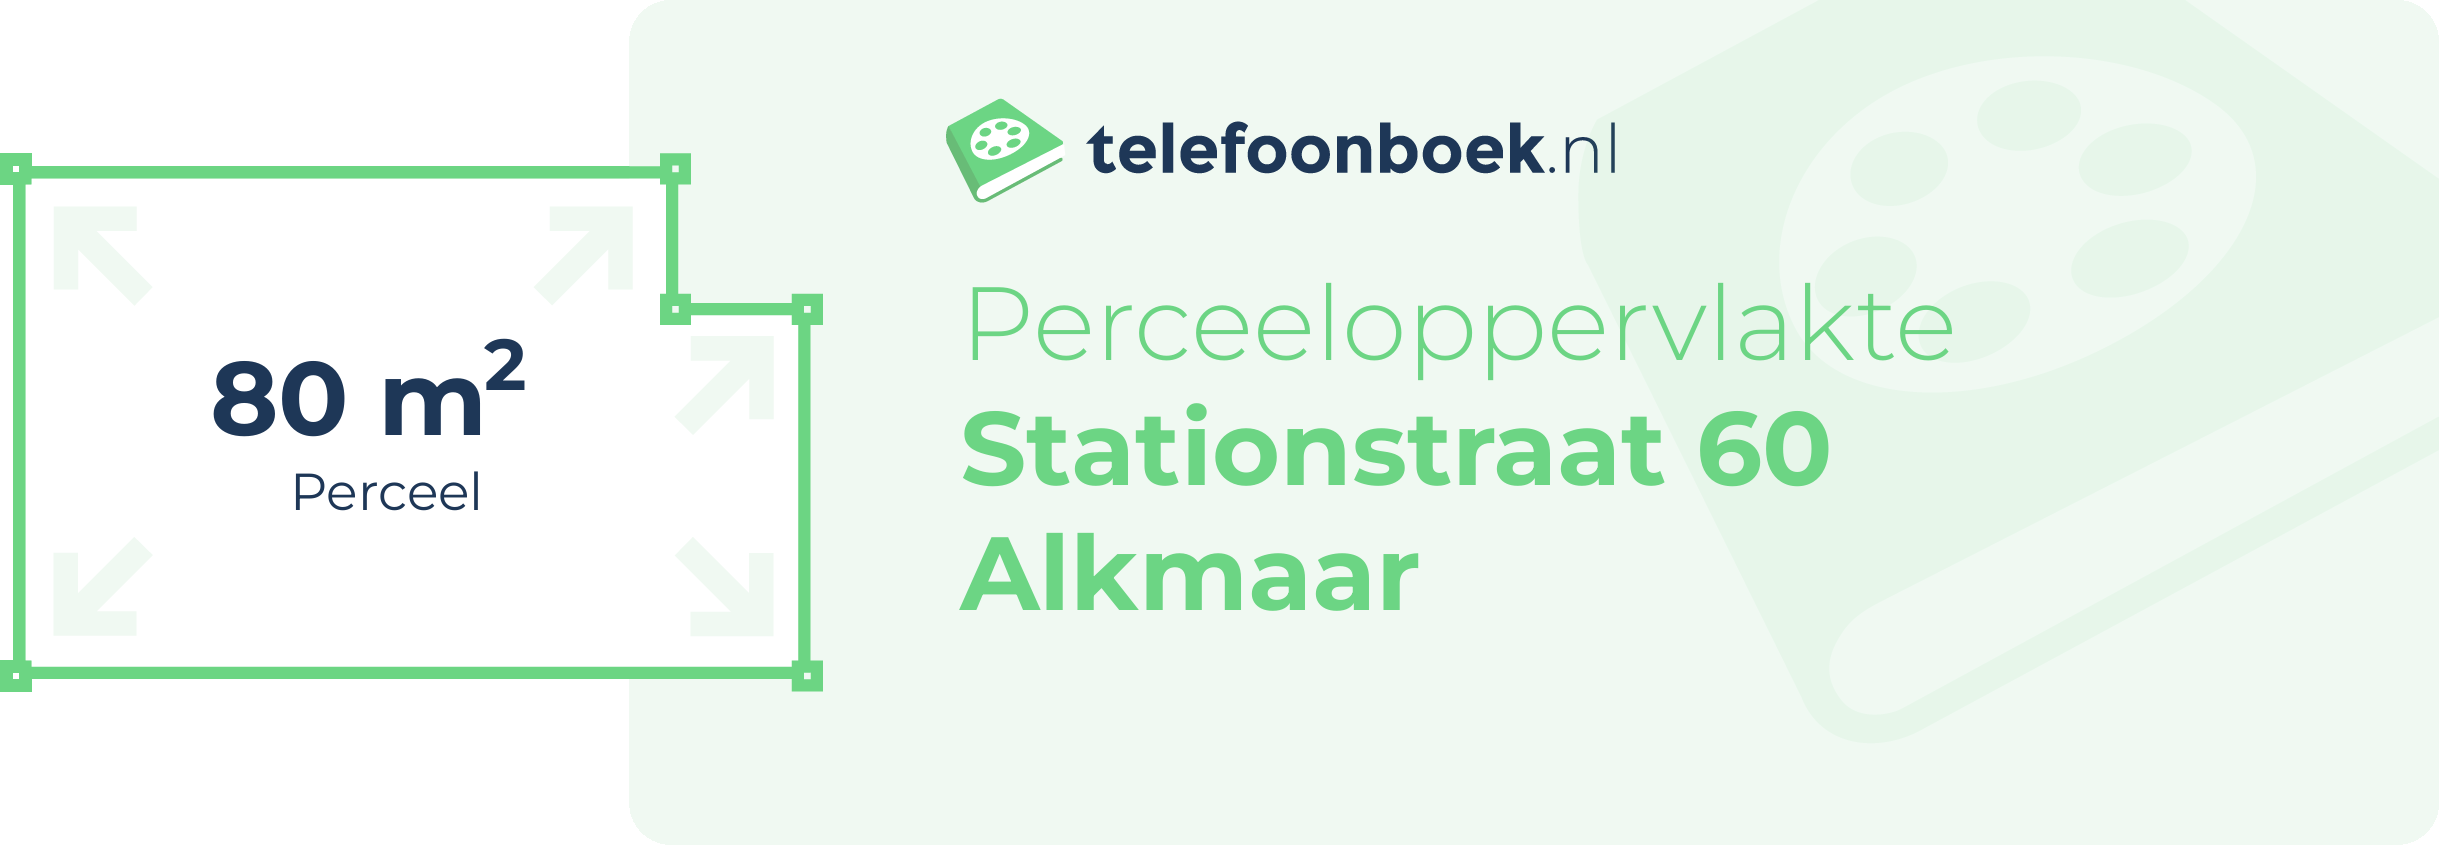 Perceeloppervlakte Stationstraat 60 Alkmaar